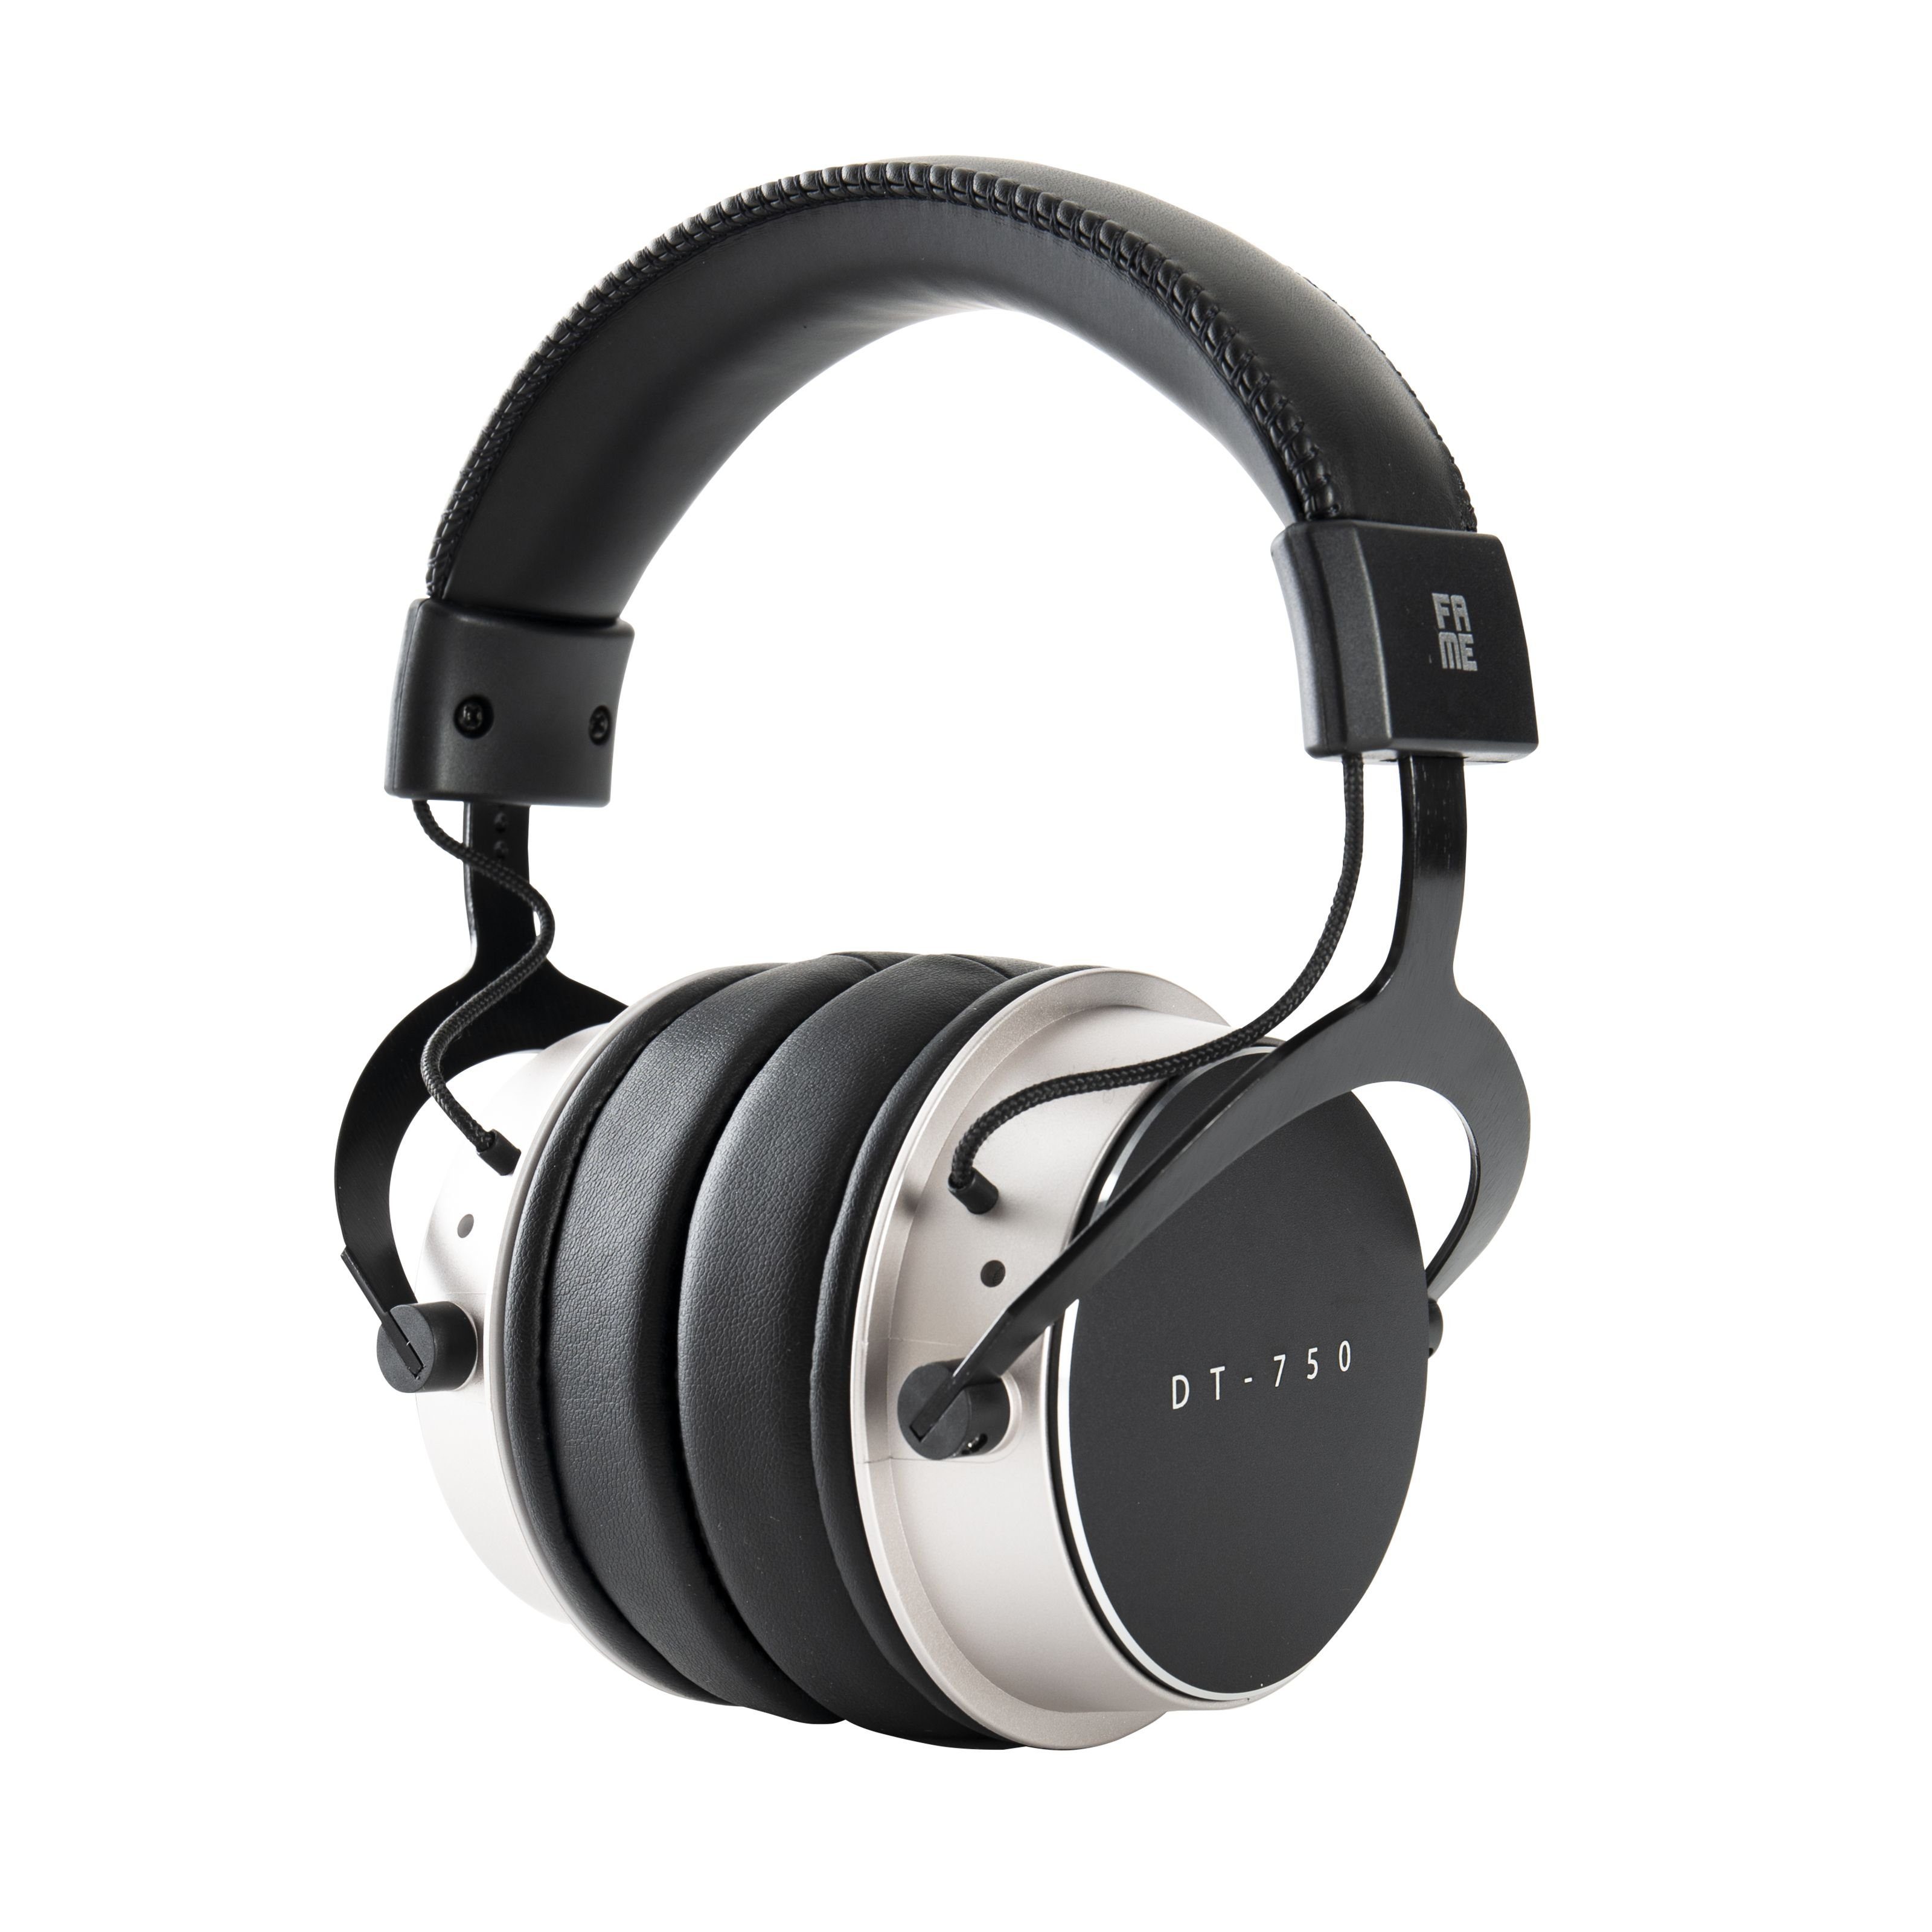 geschlossen mit Kopfhörer Kopfhörer, Kopfhörer (DT-750 Fame Audio Studio abnehmbaren Kabel)